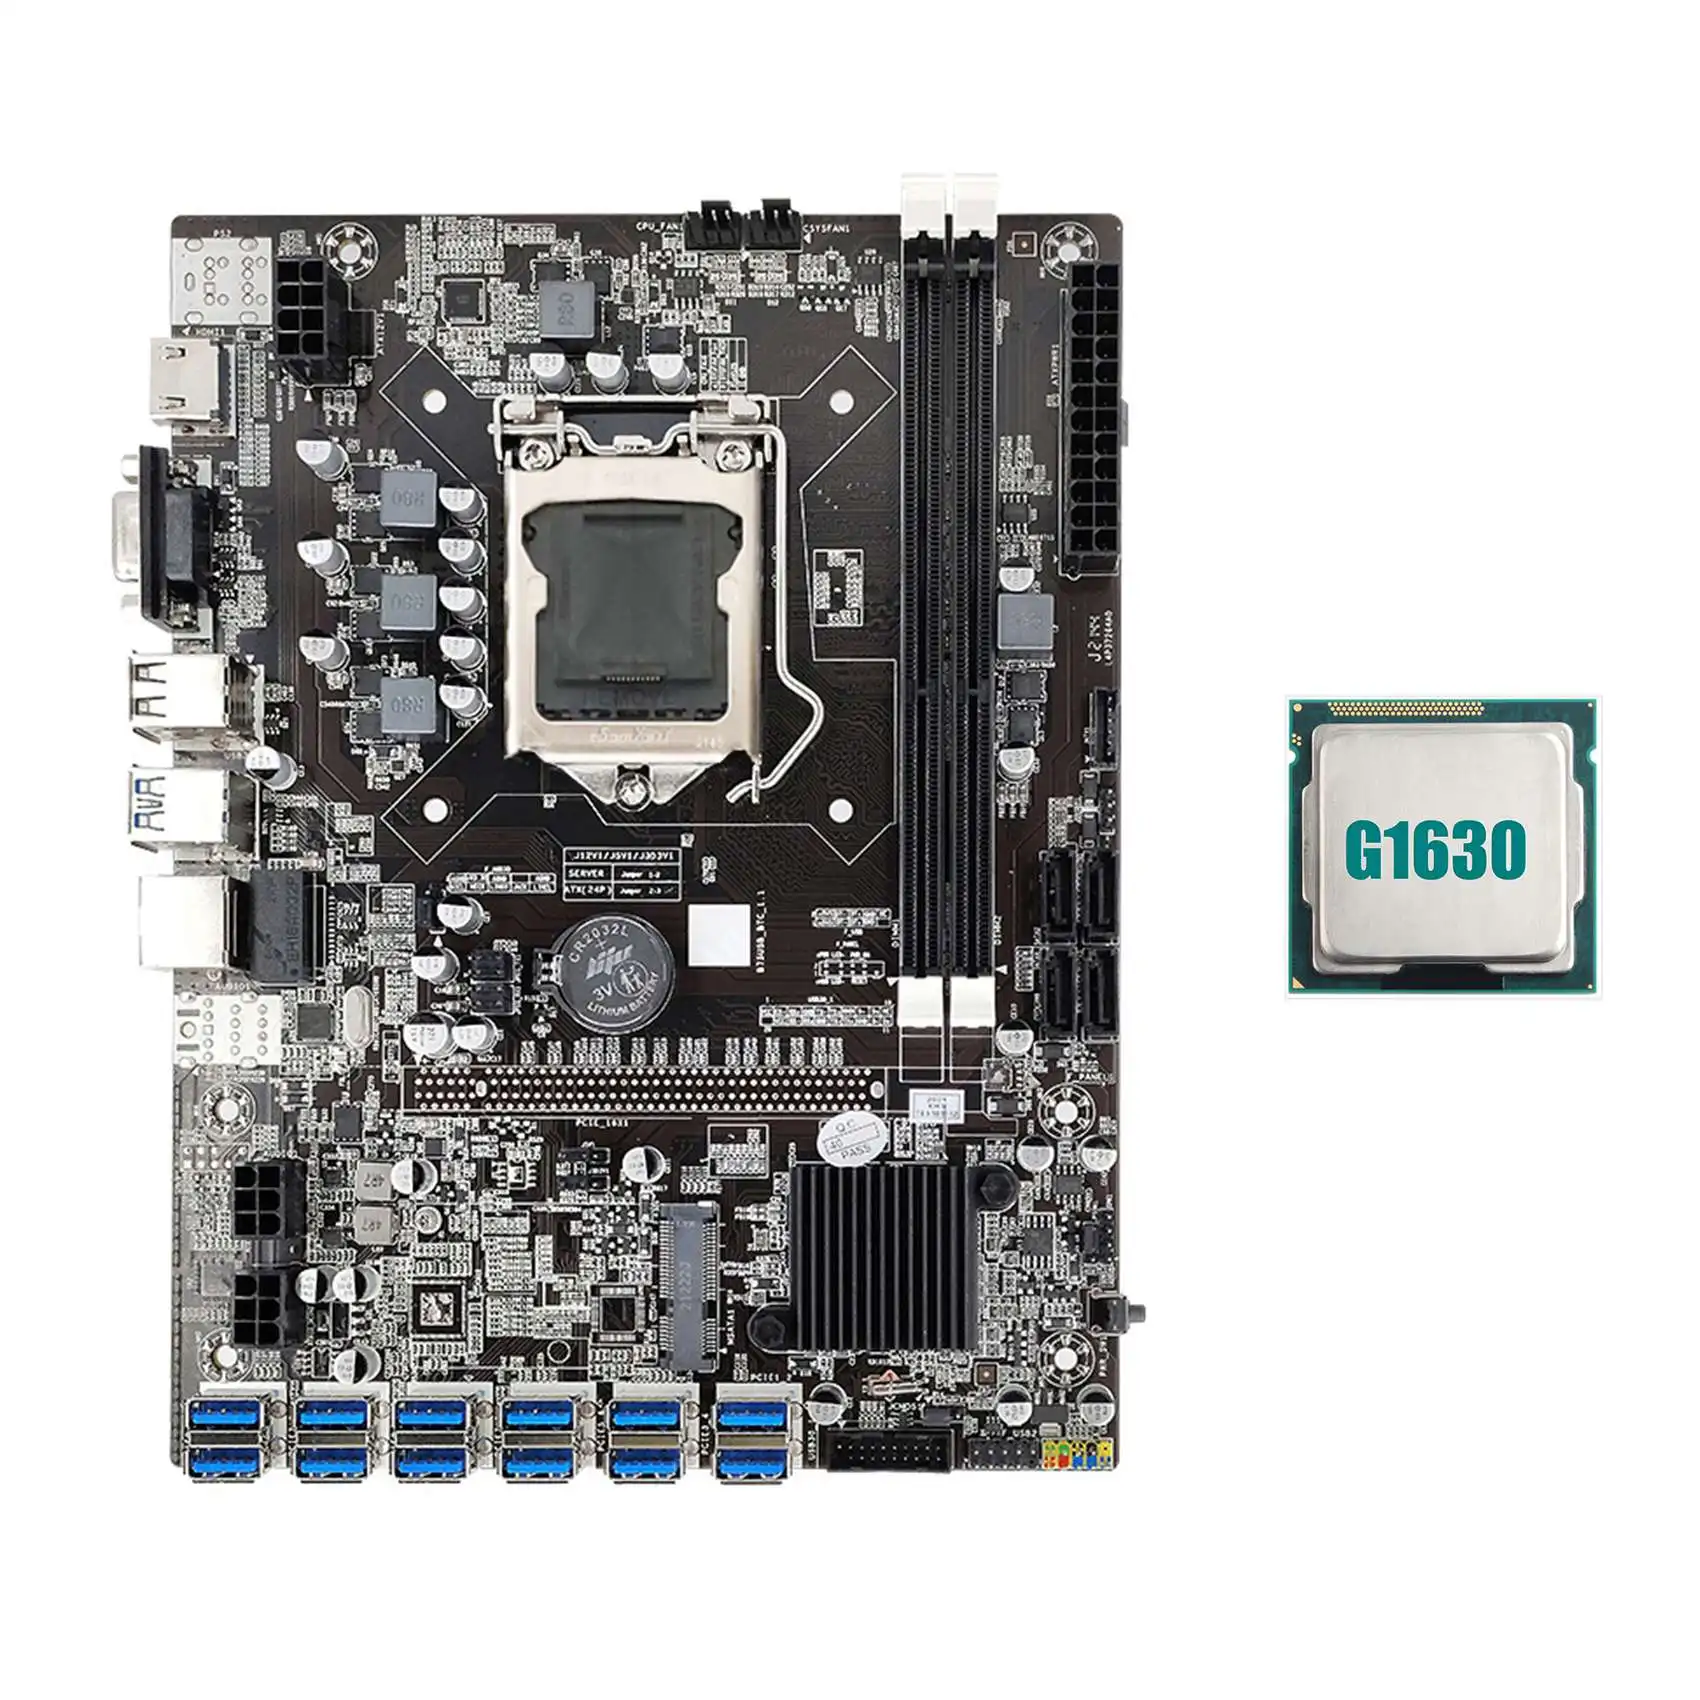 

B75 ETH Mining Motherboard 12 PCIE to USB with G1630 CPU LGA1155 MSATA Support 2XDDR3 B75 USB BTC Miner Motherboard